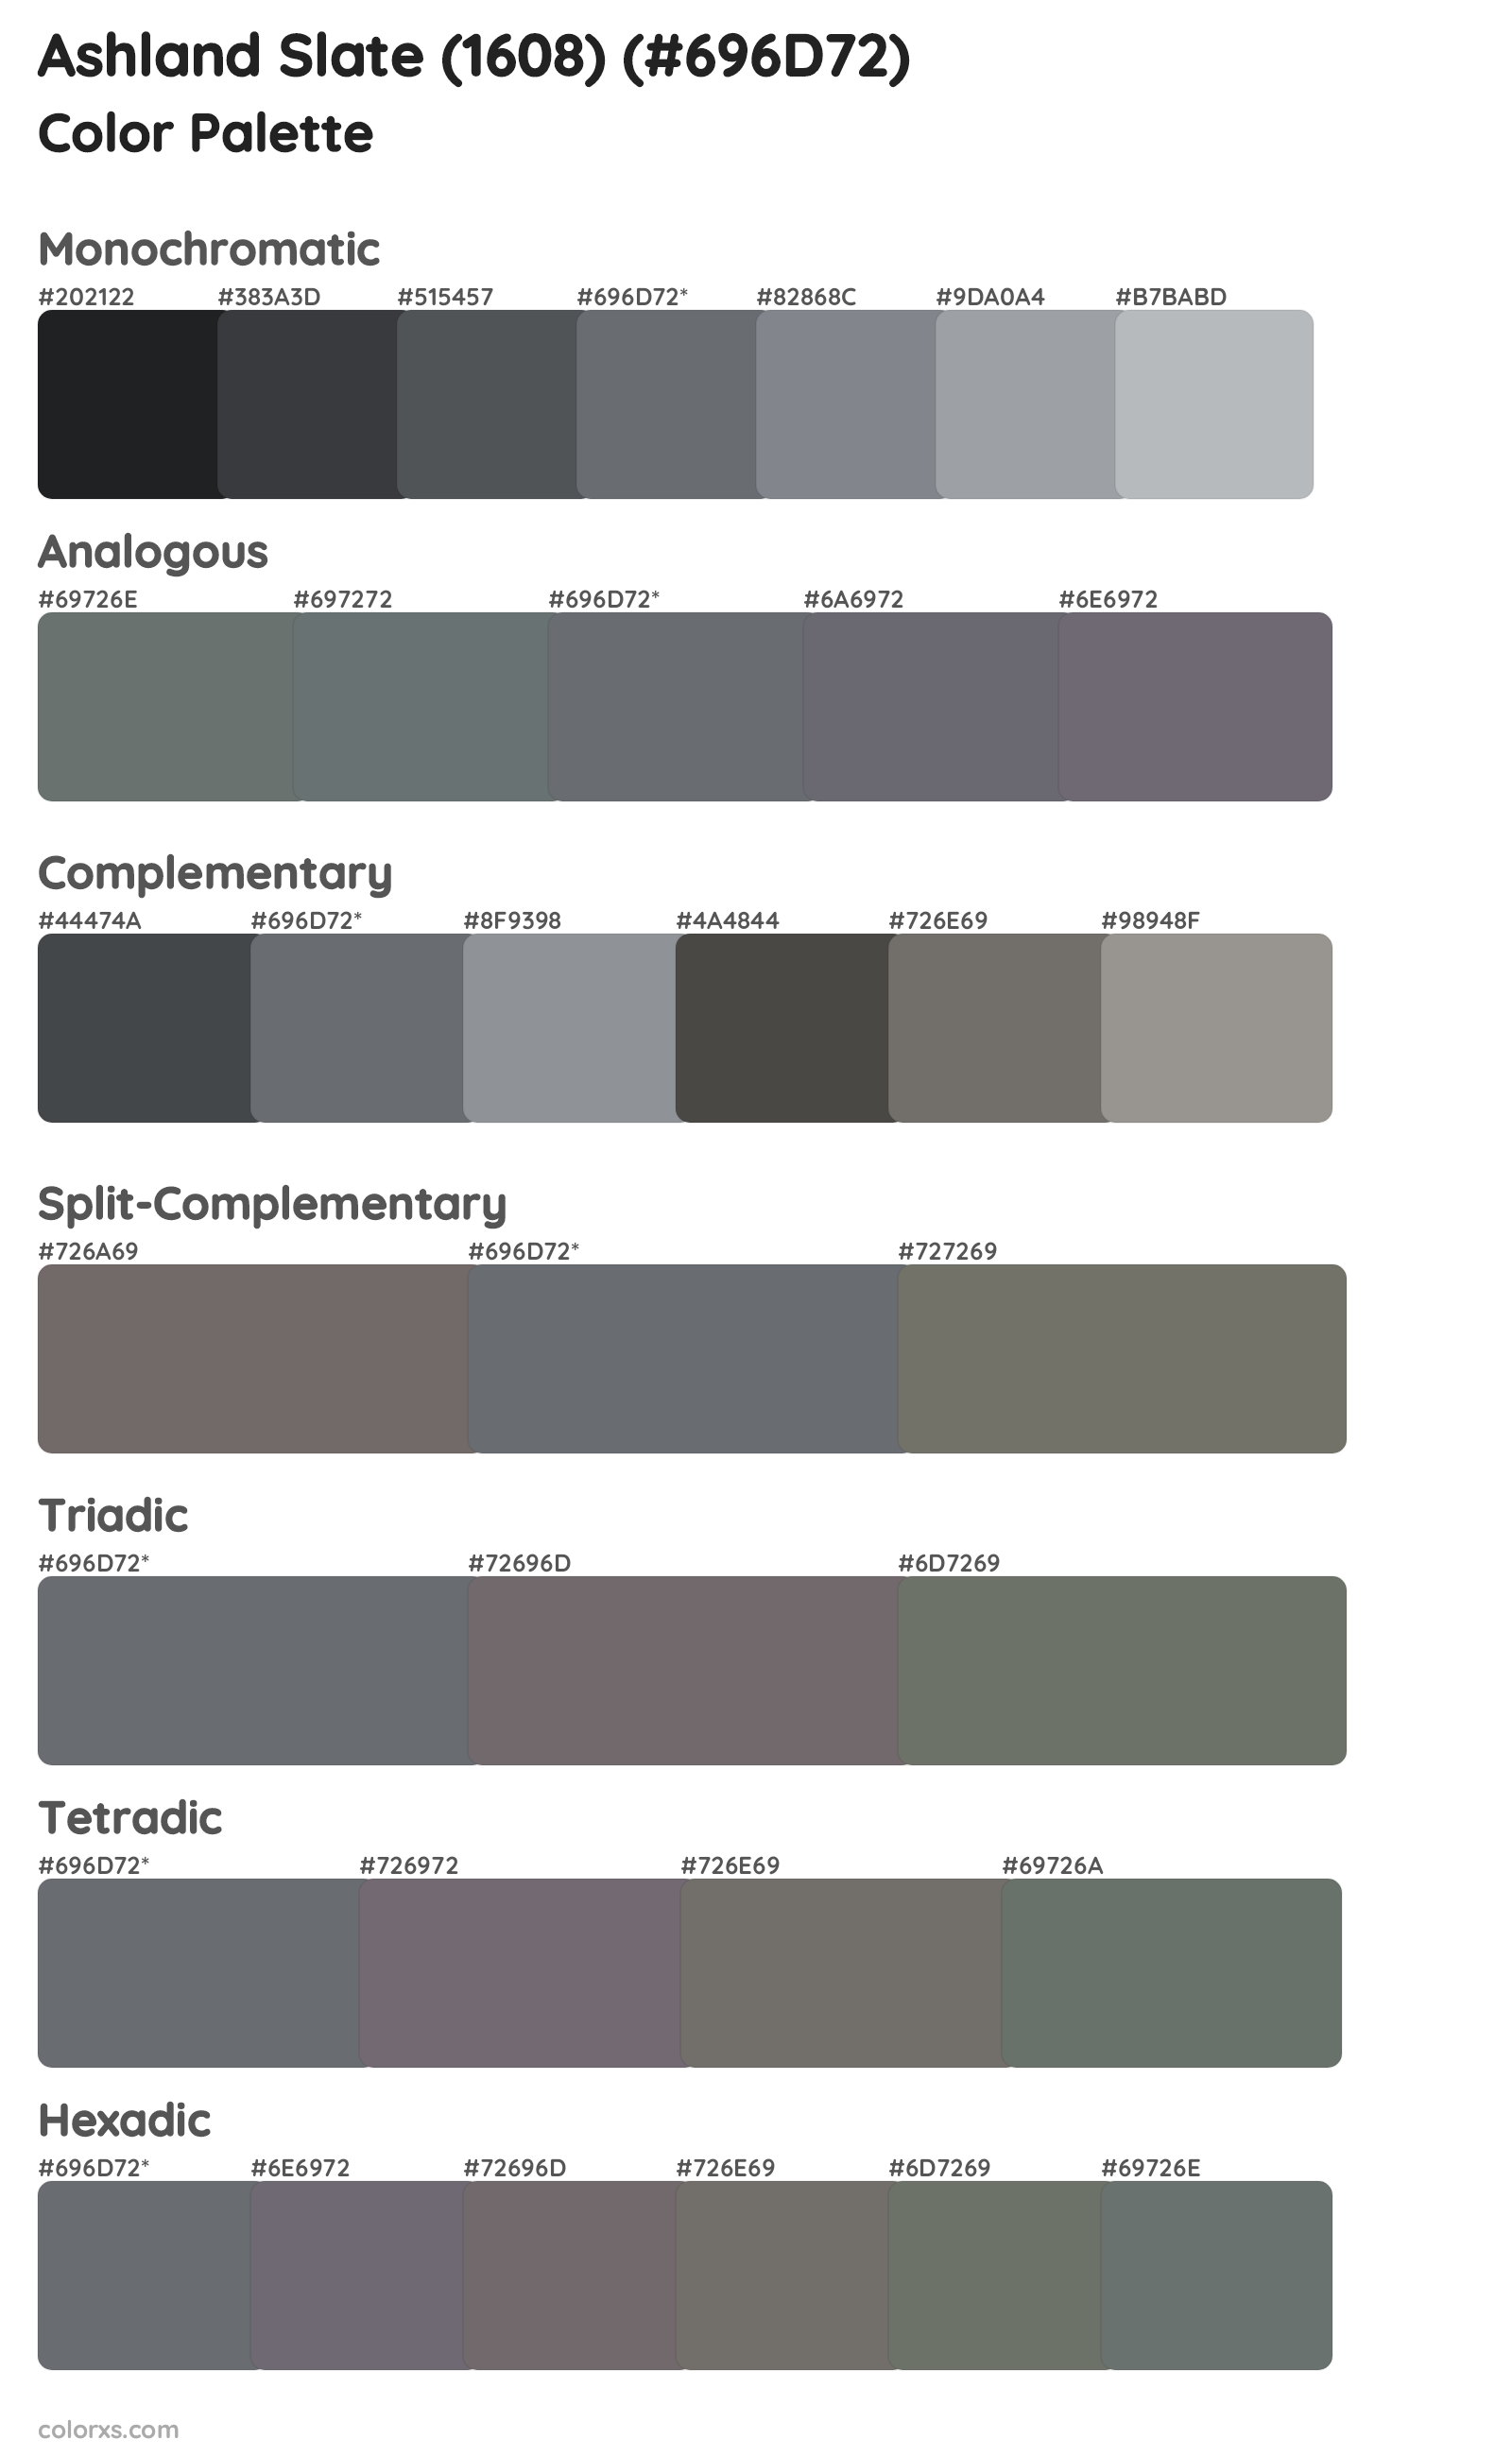 Ashland Slate (1608) Color Scheme Palettes